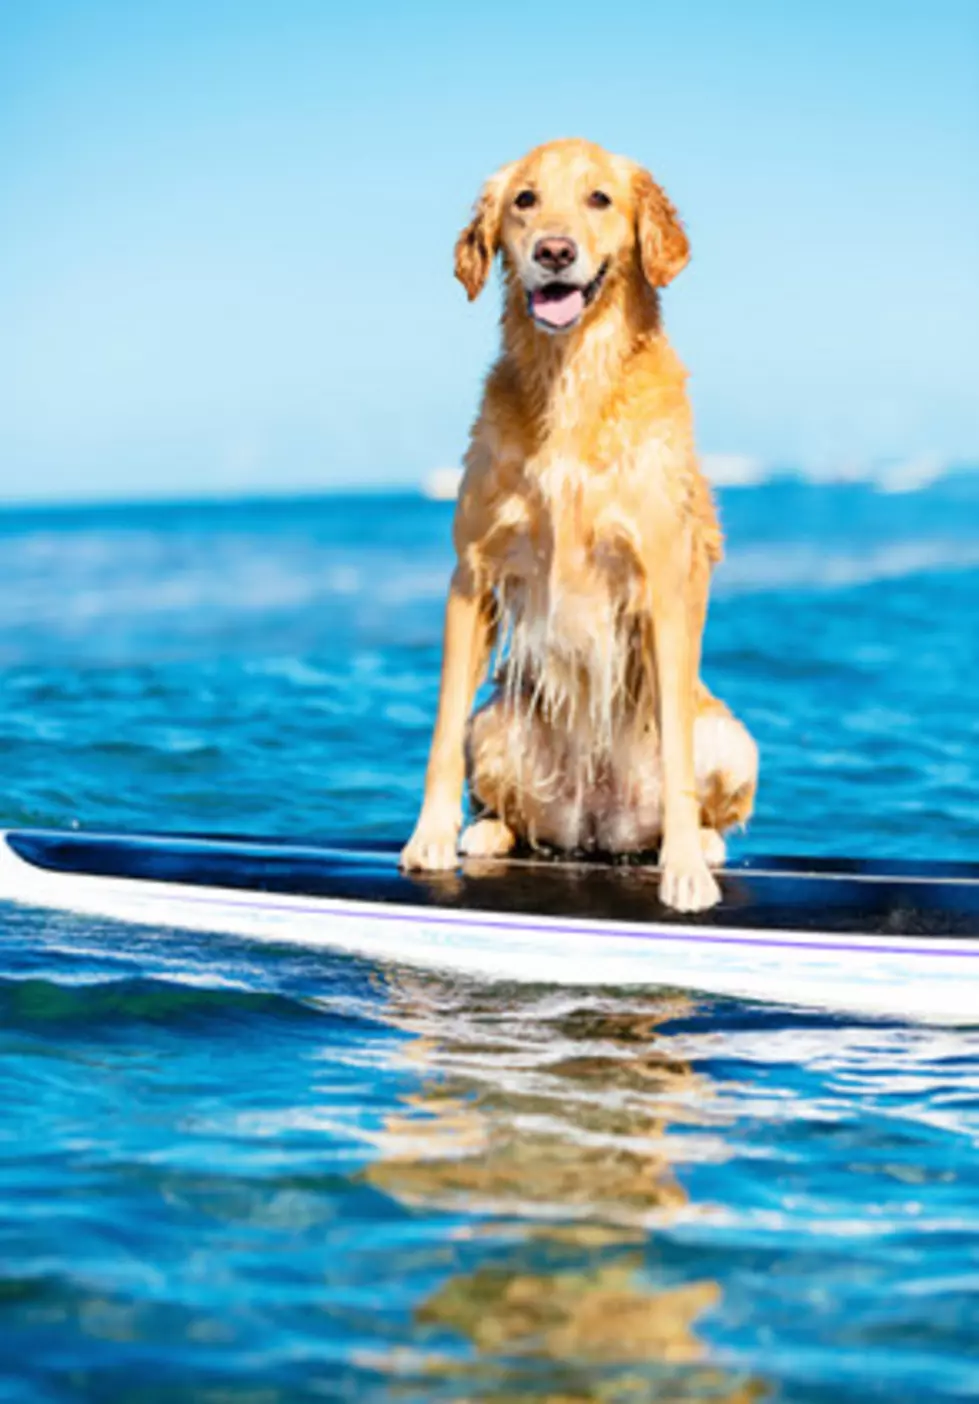 Dogs Love The Aquatic Life [Videos]